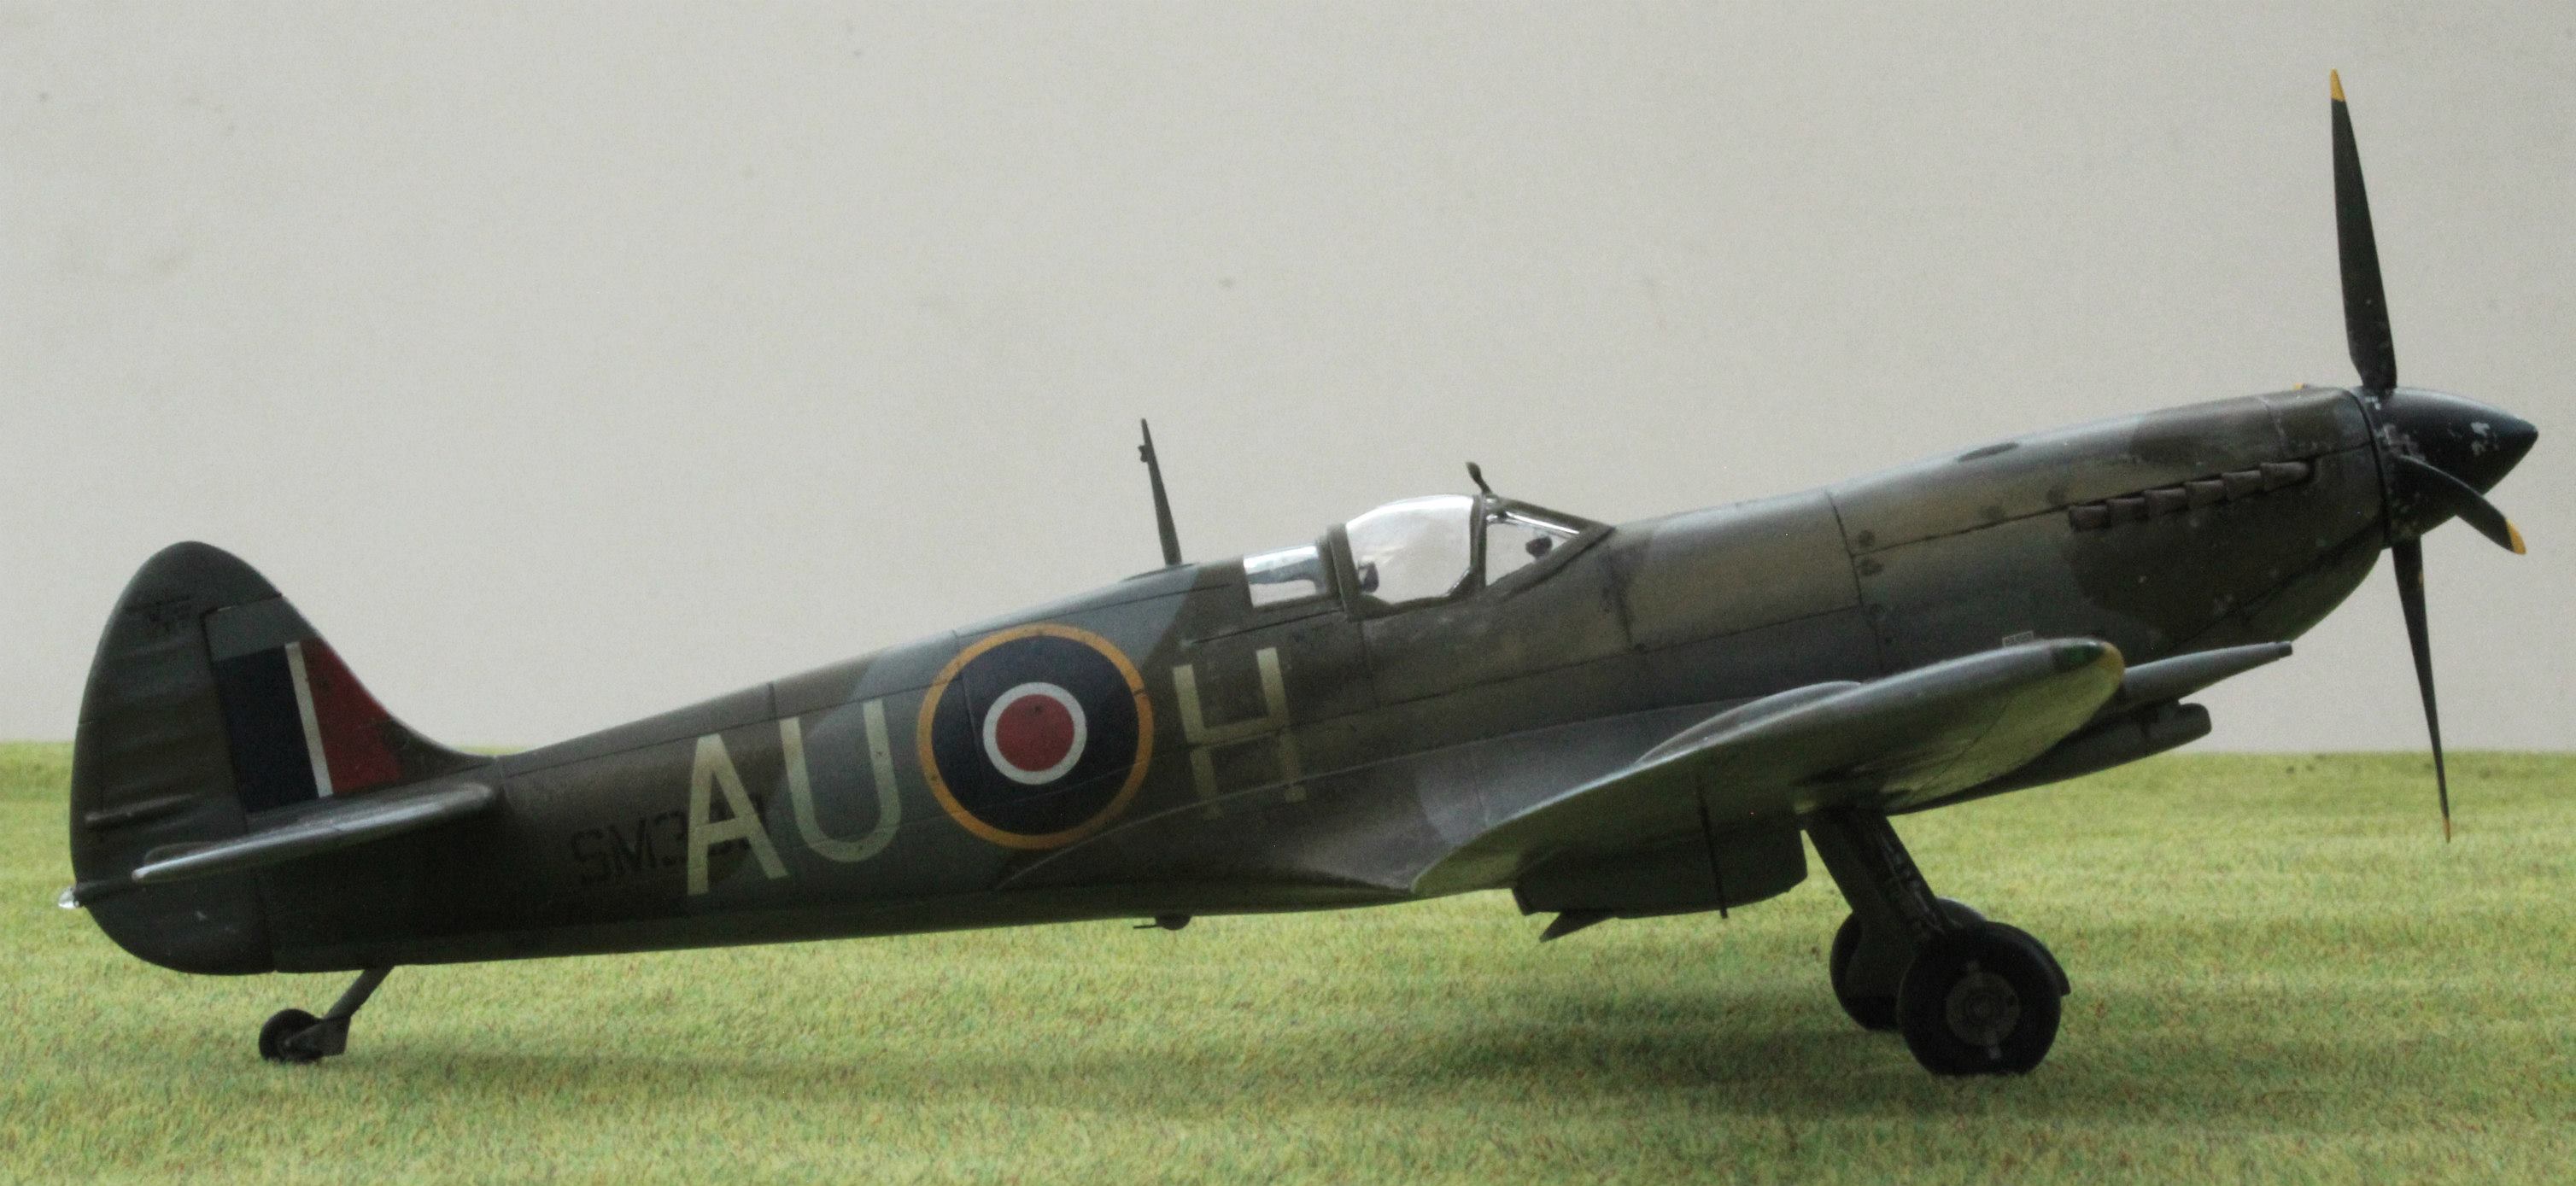 Spitfire LF.Mk.XVIe, SM309/AU-H, “Panama Bound”. Airfix kit in 1/48th scale.